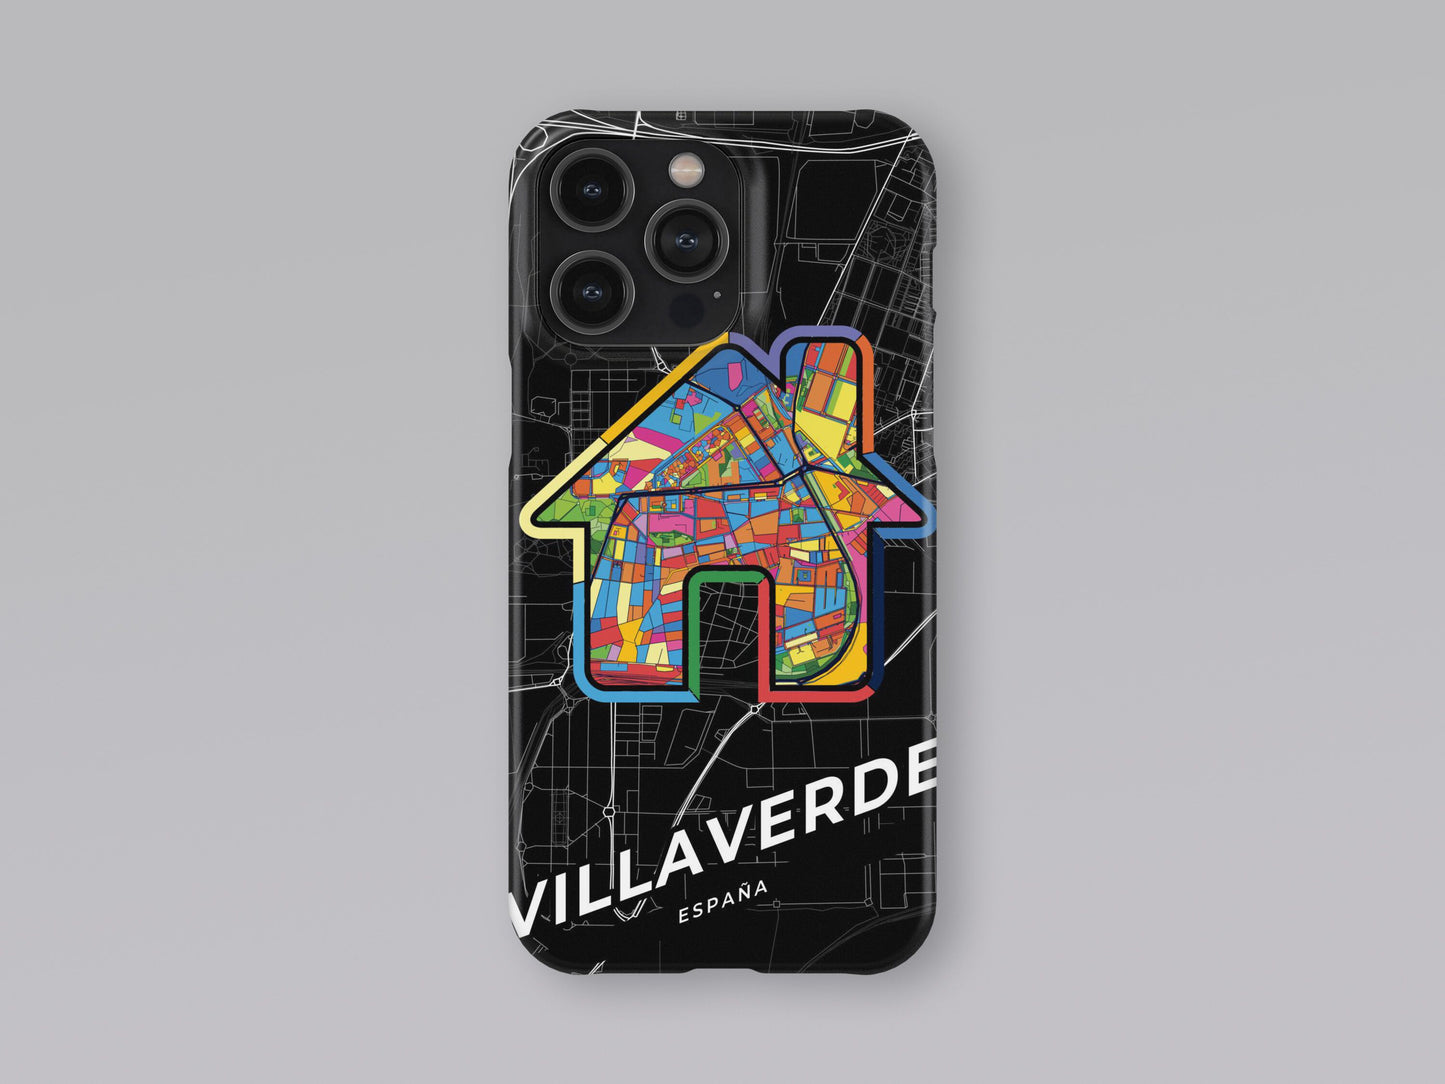 Villaverde Spain slim phone case with colorful icon 3